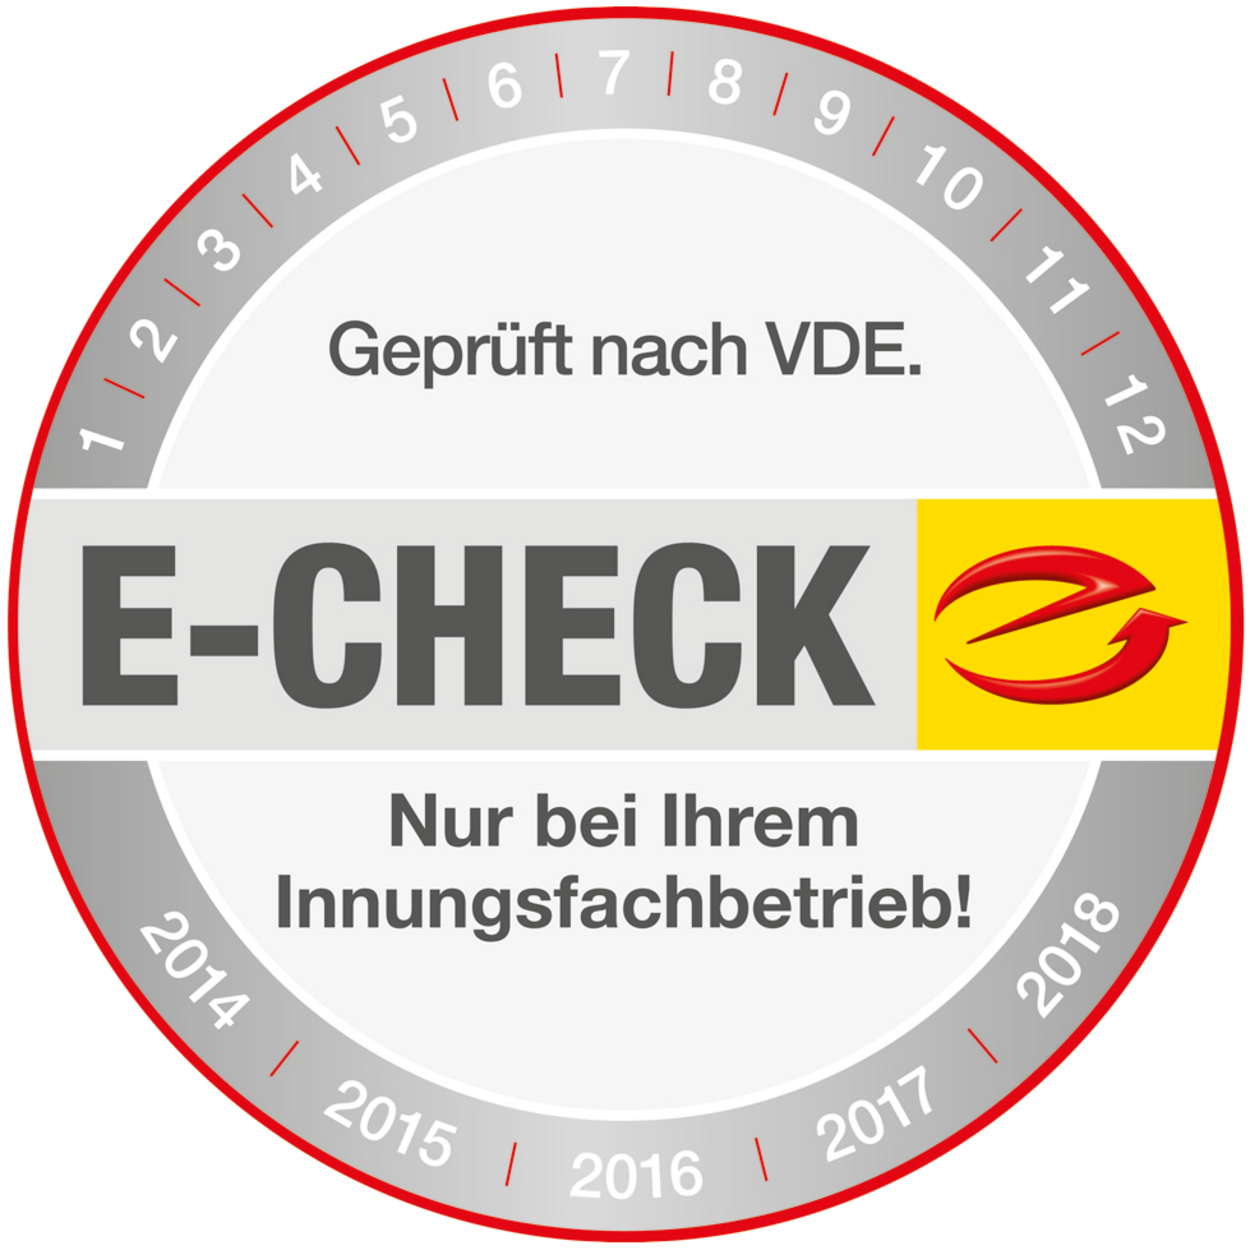 Der E-Check bei Weber GmbH in Leingarten